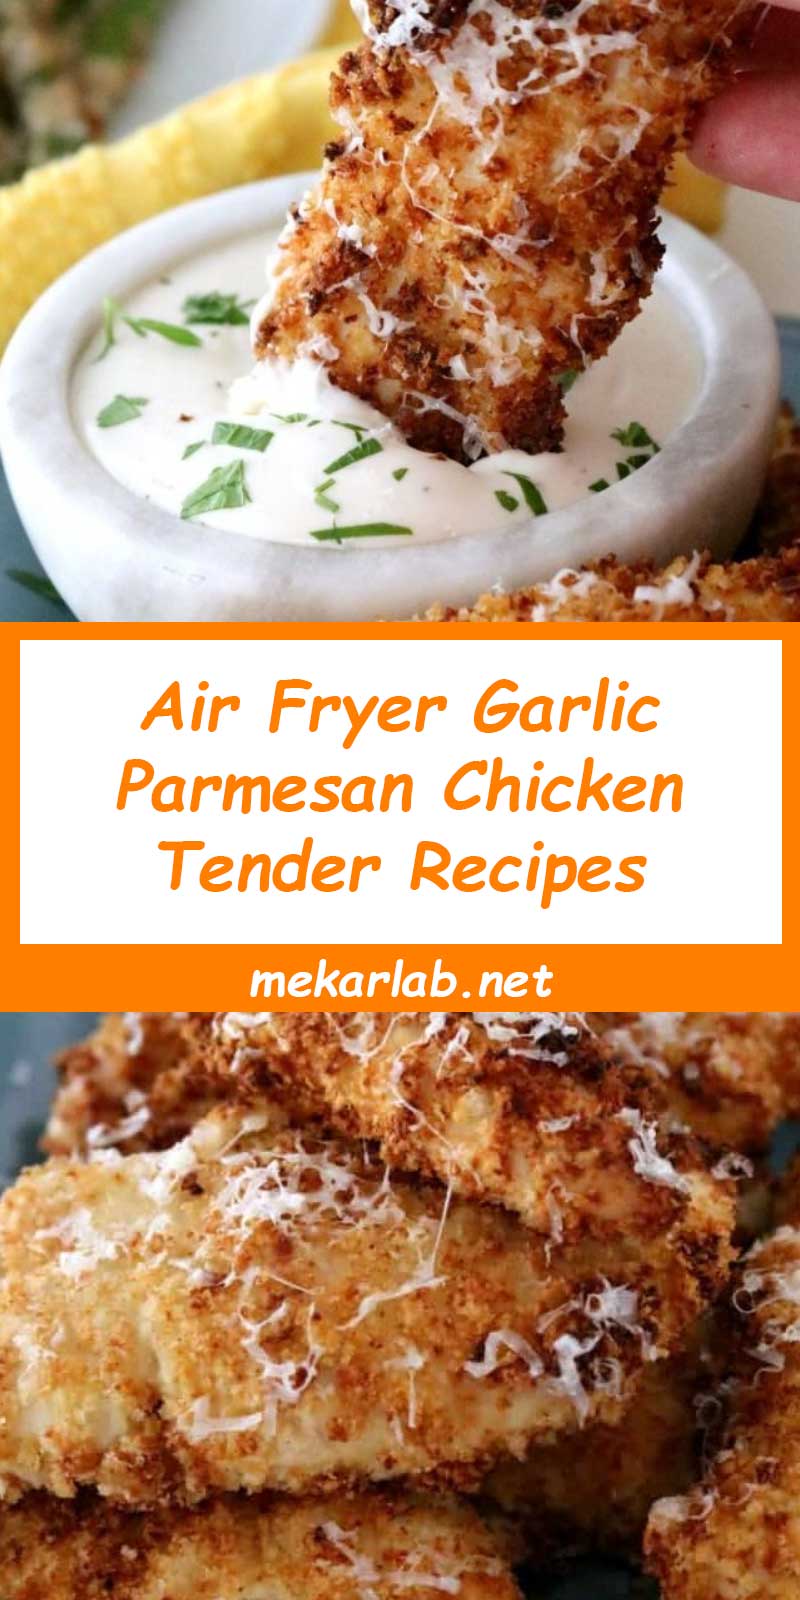 Air Fryer Garlic Parmesan Chicken Tender Recipes